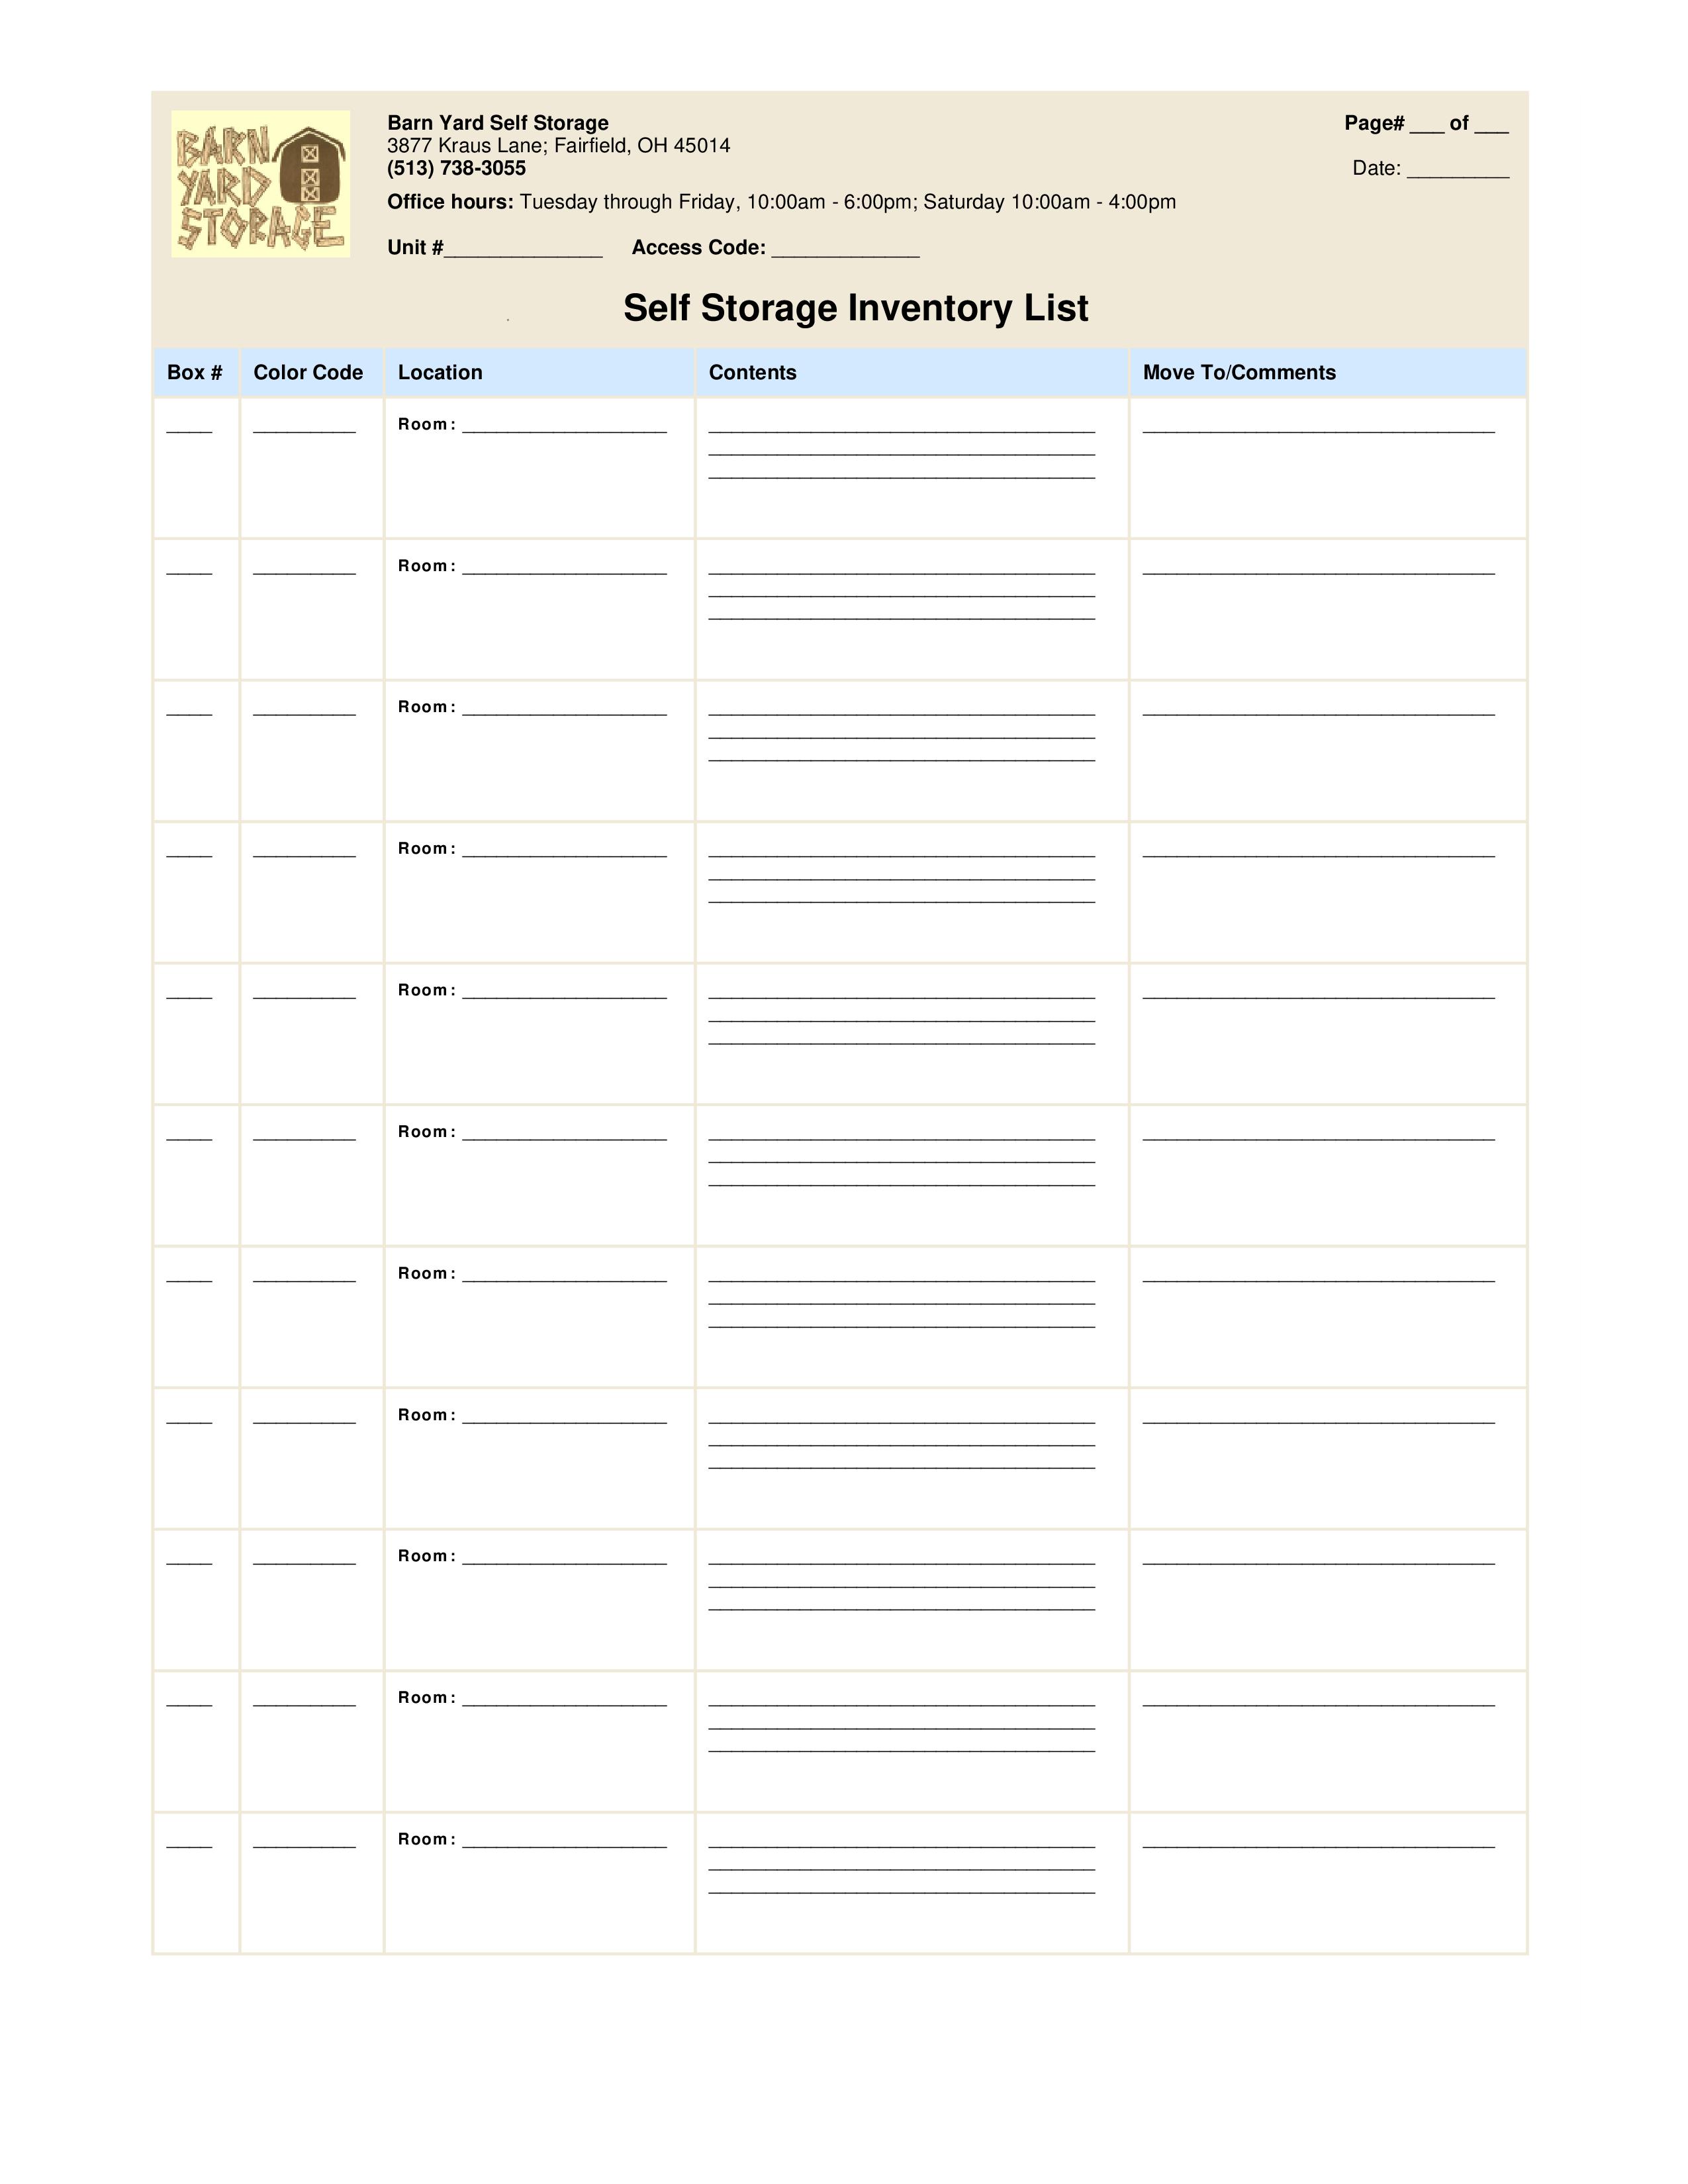 Self Storage Inventory List main image